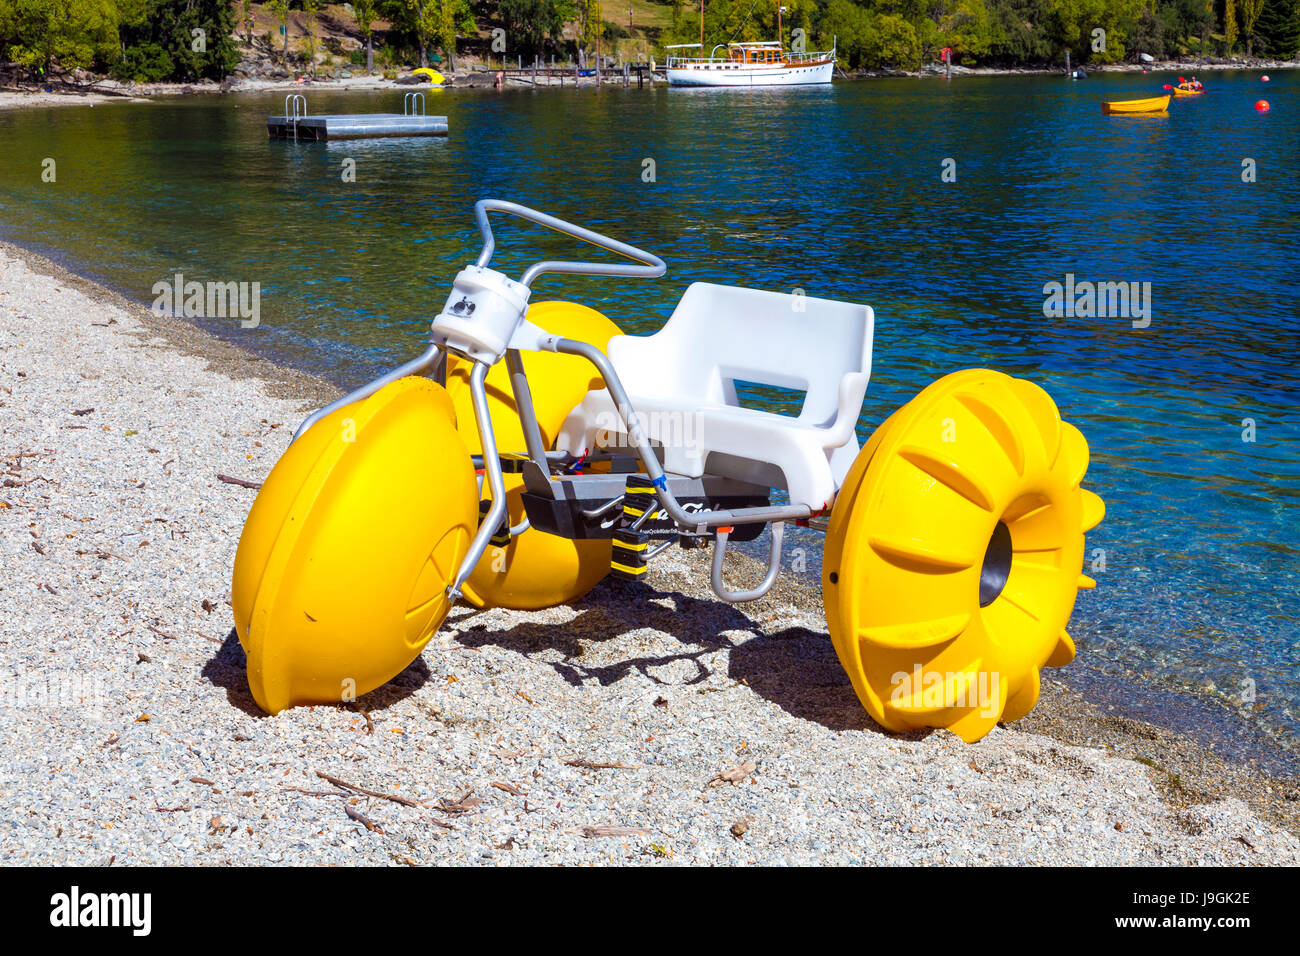 Aqua cycle on he beach in Queenstown, New Zealand Stock Photo